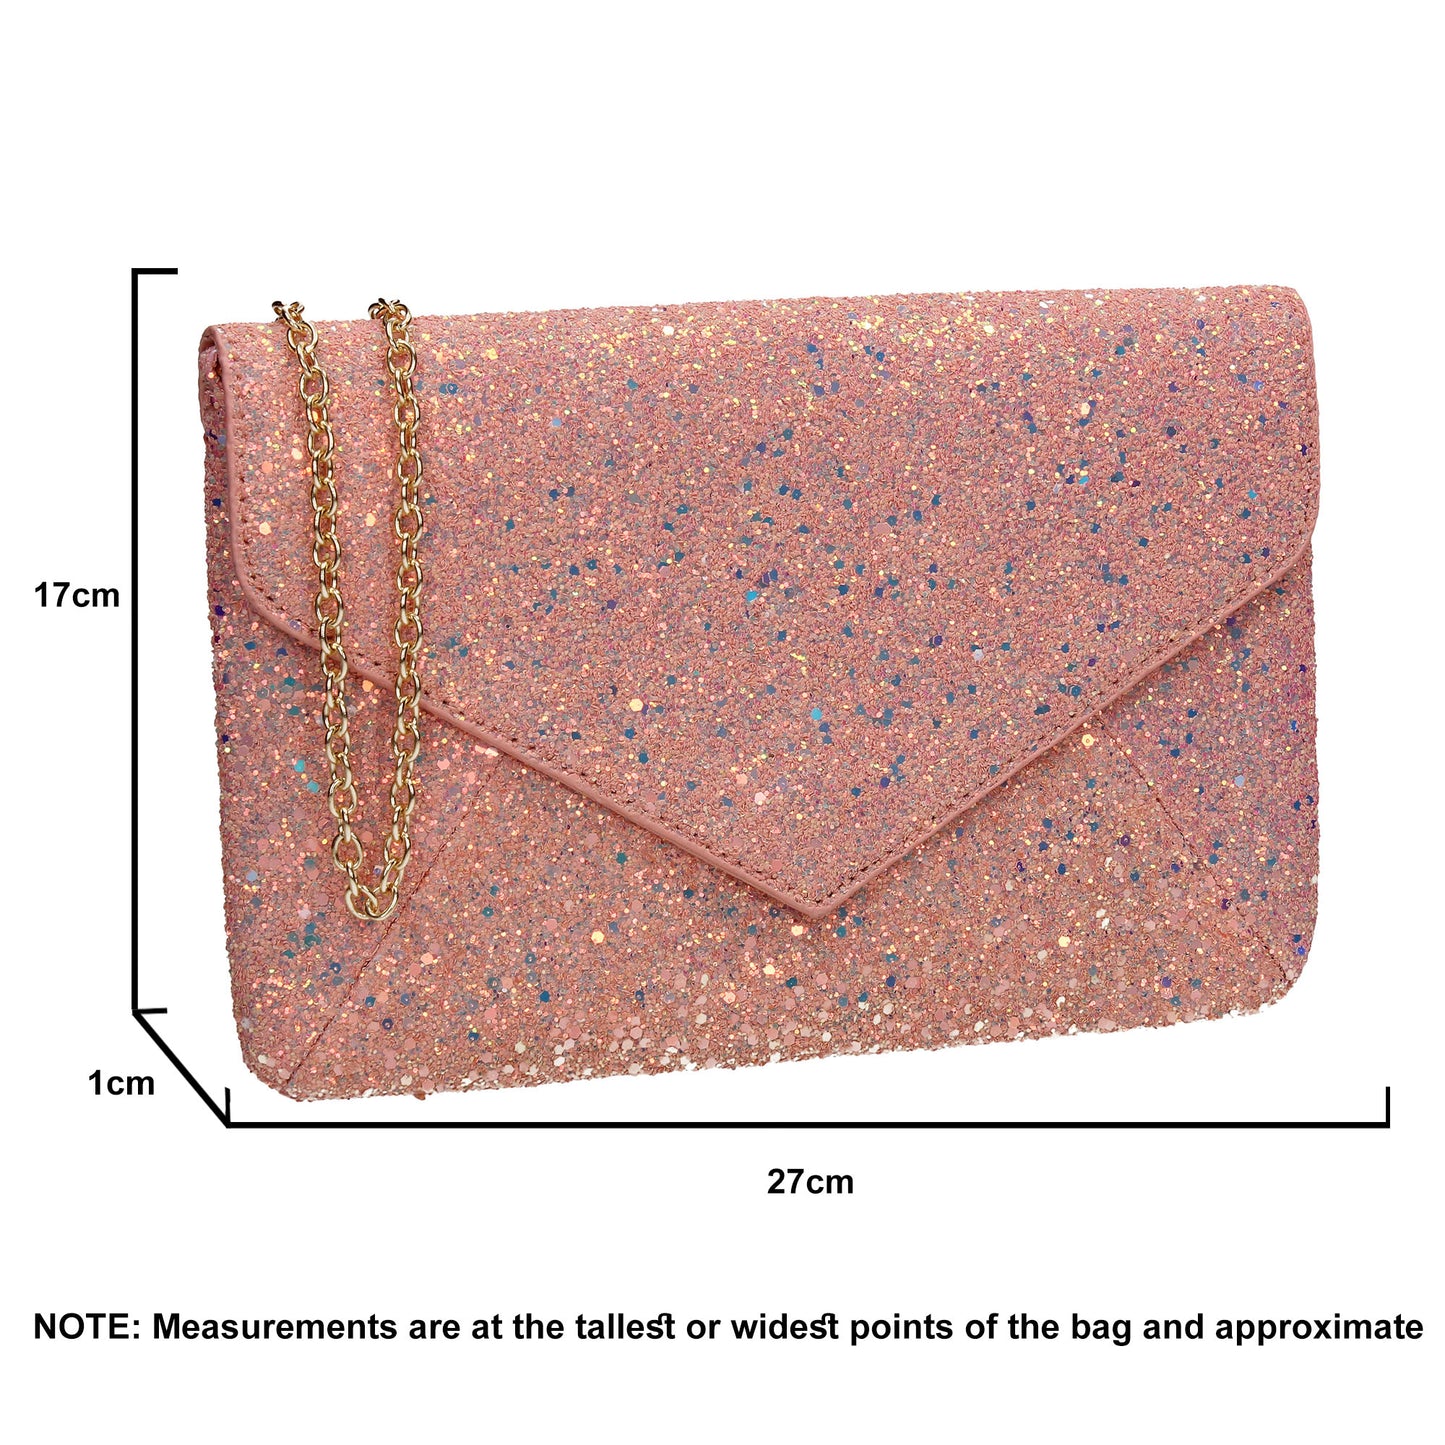 SWANKYSWANS Zuri Clutch Bag Pink Cute Cheap Clutch Bag For Weddings School and Work